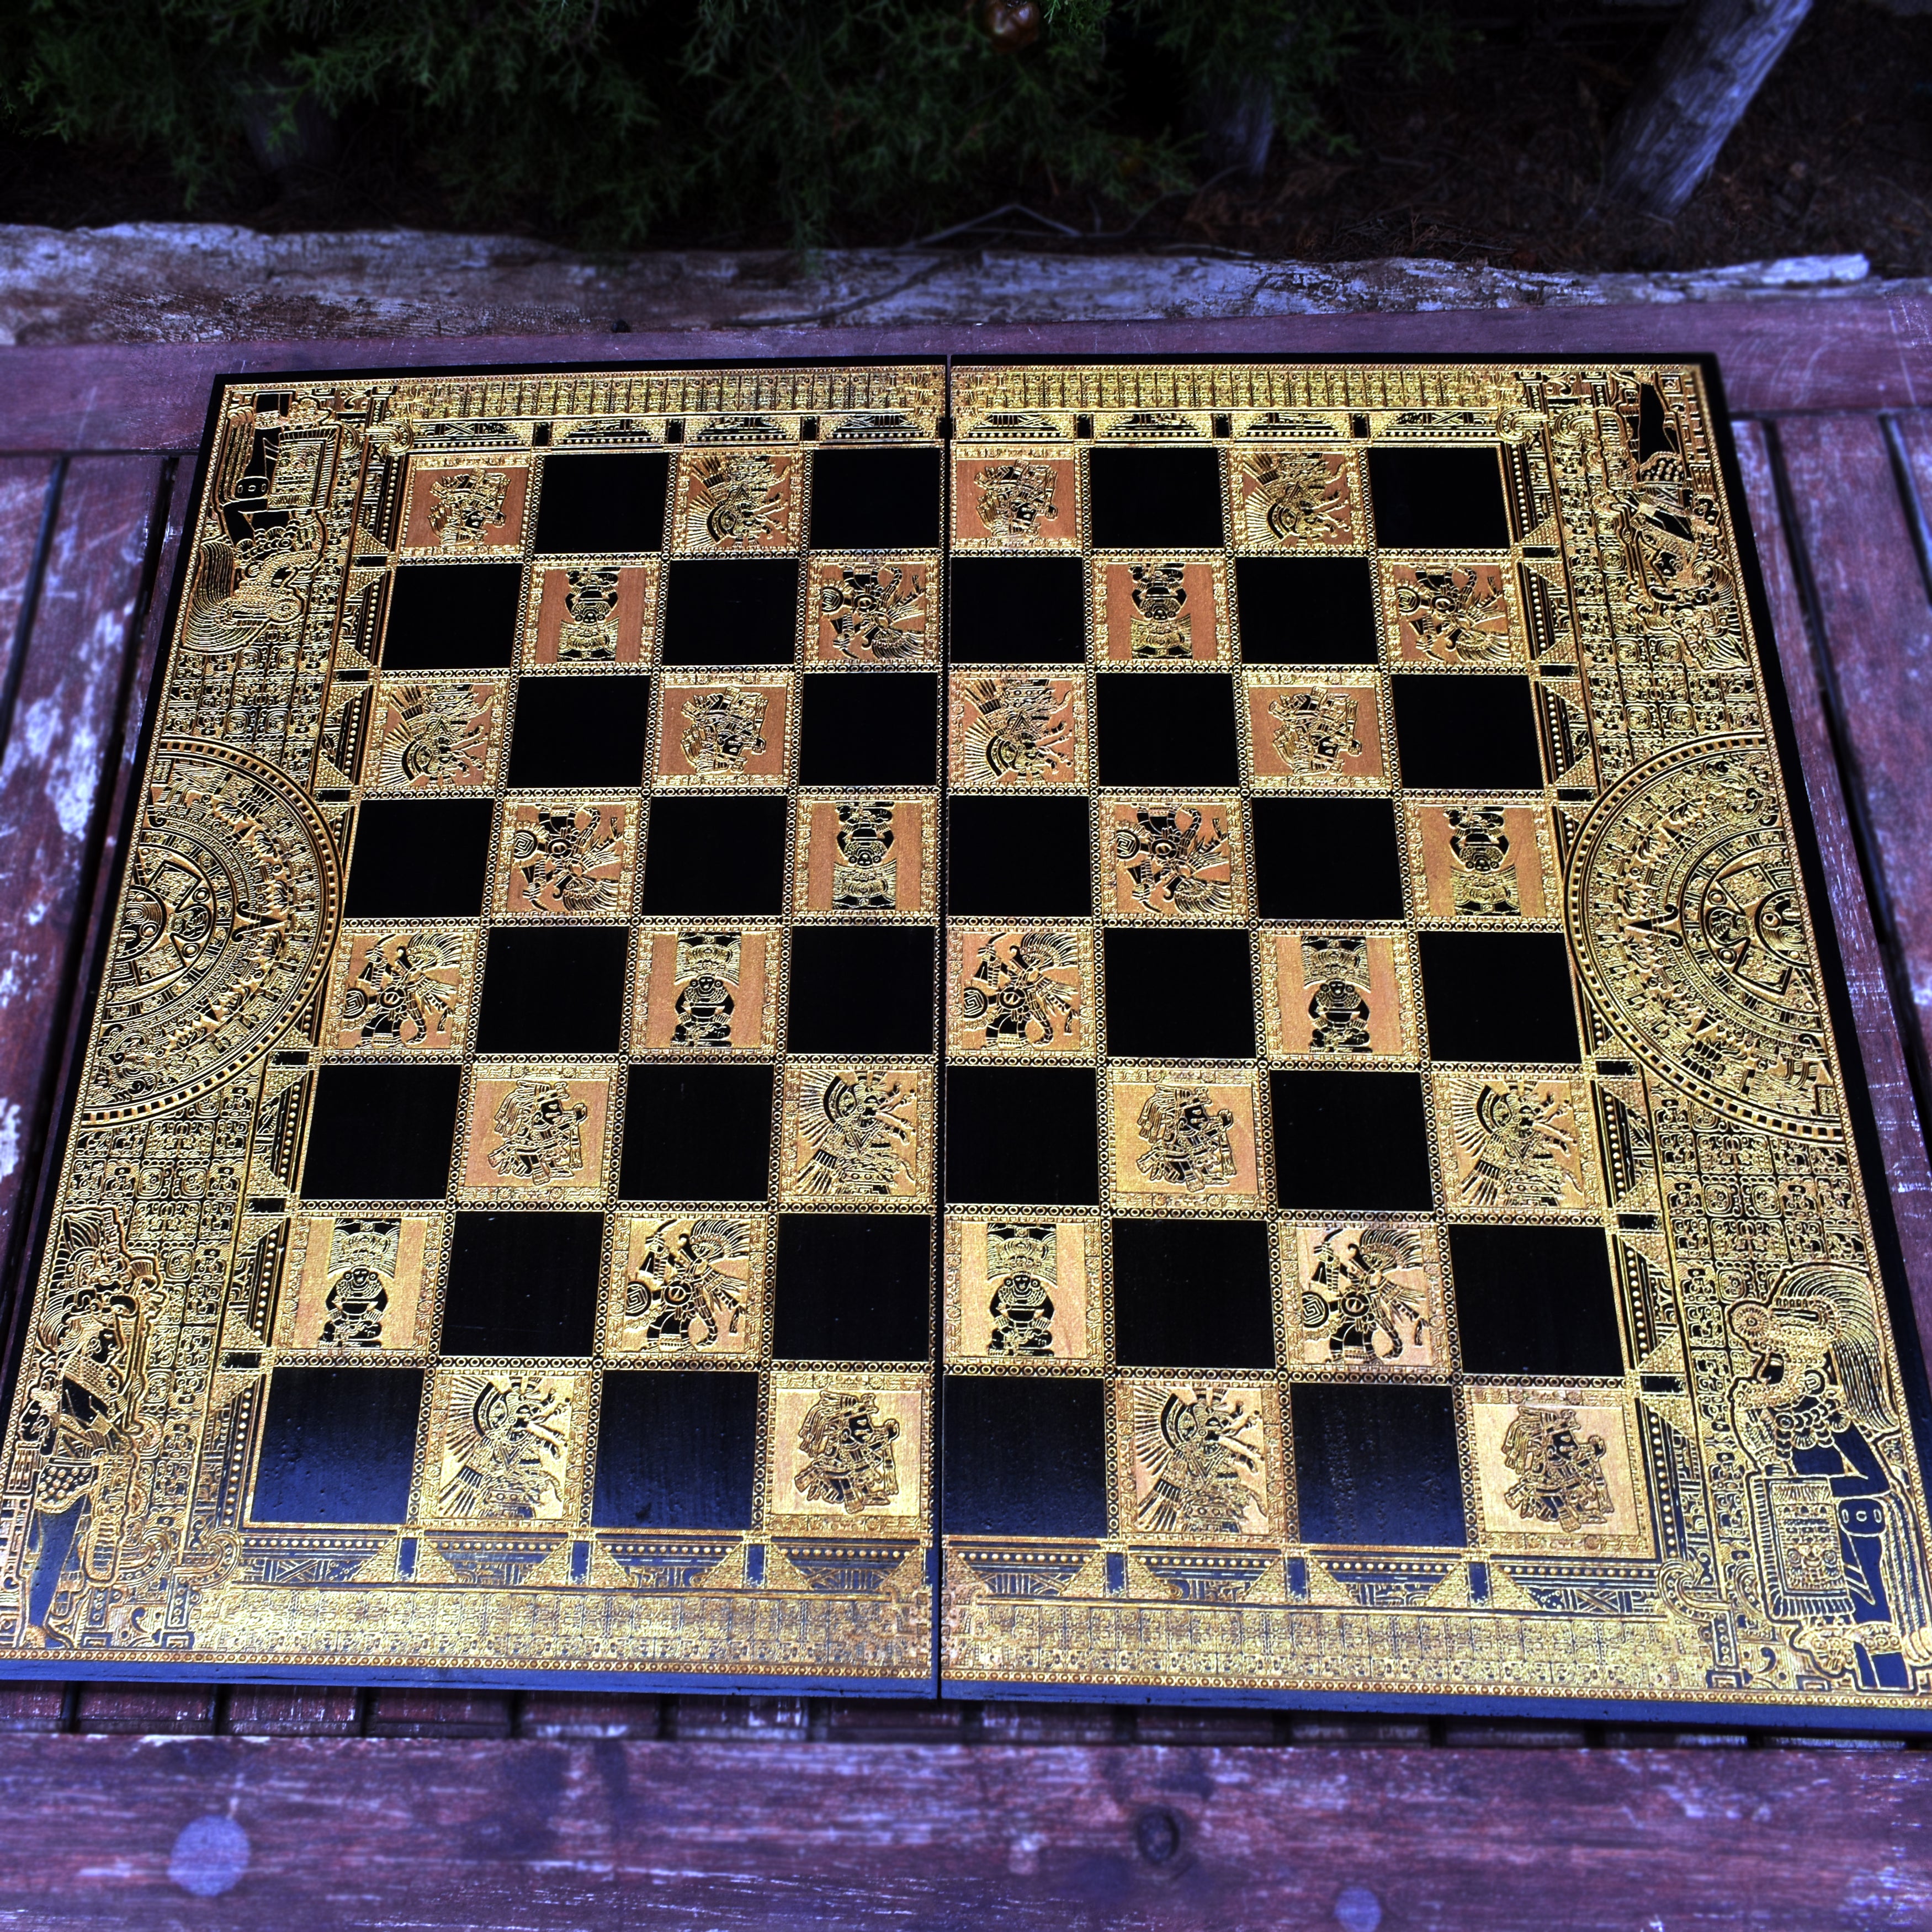 chess board wood